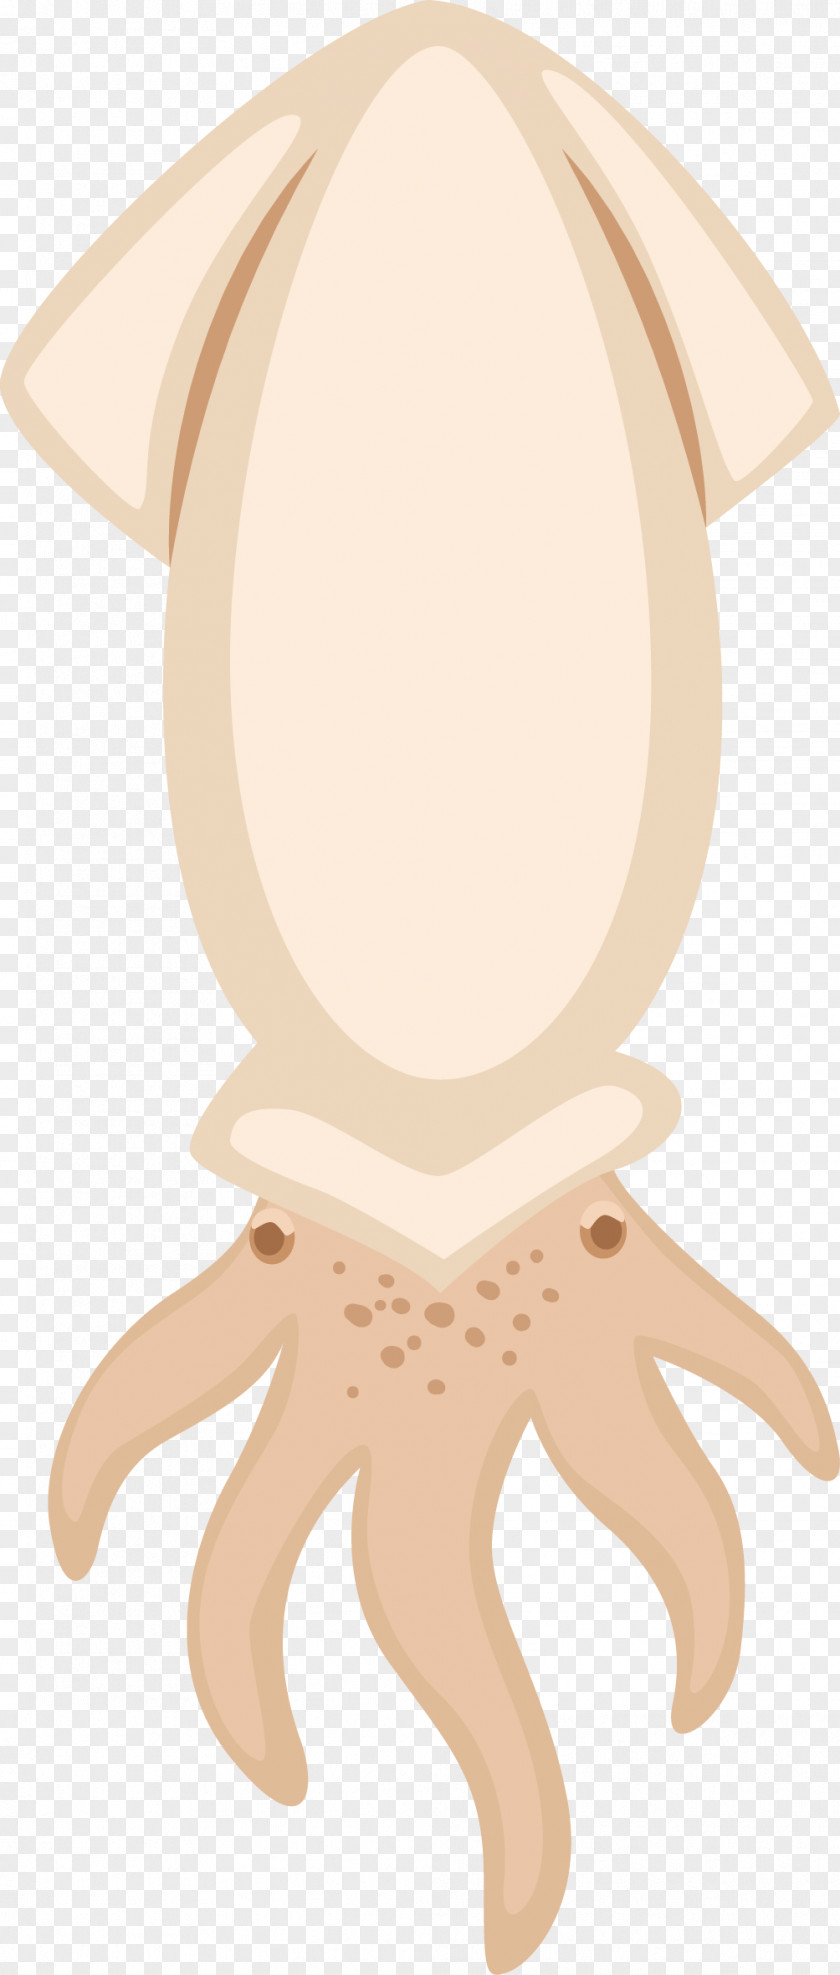 Stock Vector Mushrooms Octopus Cartoon Character Illustration PNG